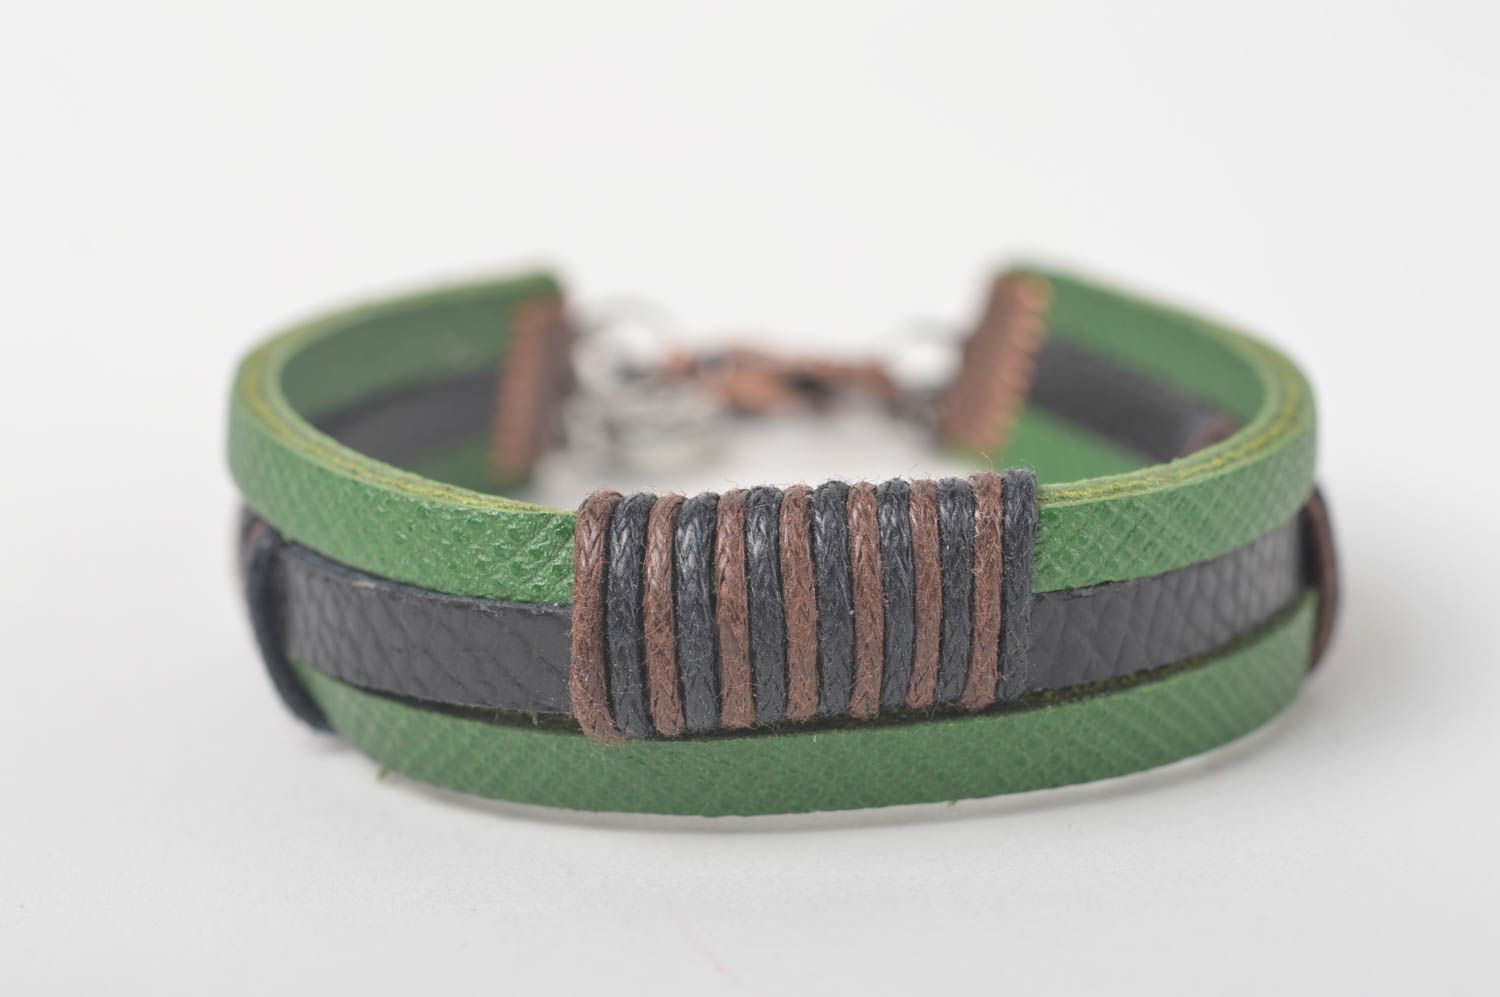 Stylish handmade leather bracelet designs leather goods fashion accessories photo 2